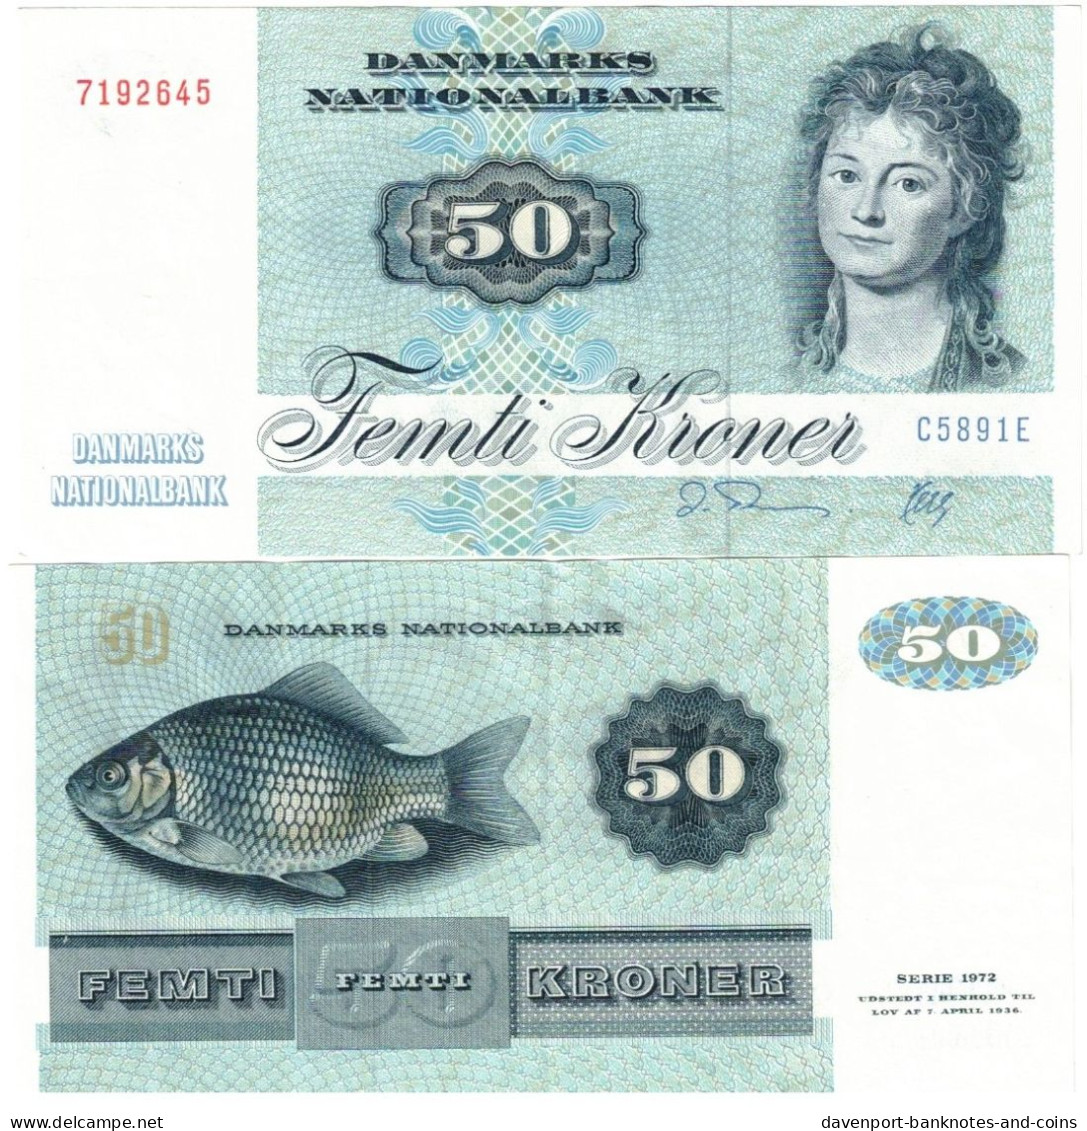 Denmark 50 Kroner 1989 VF/EF "Thomasen/Herly" - Denmark